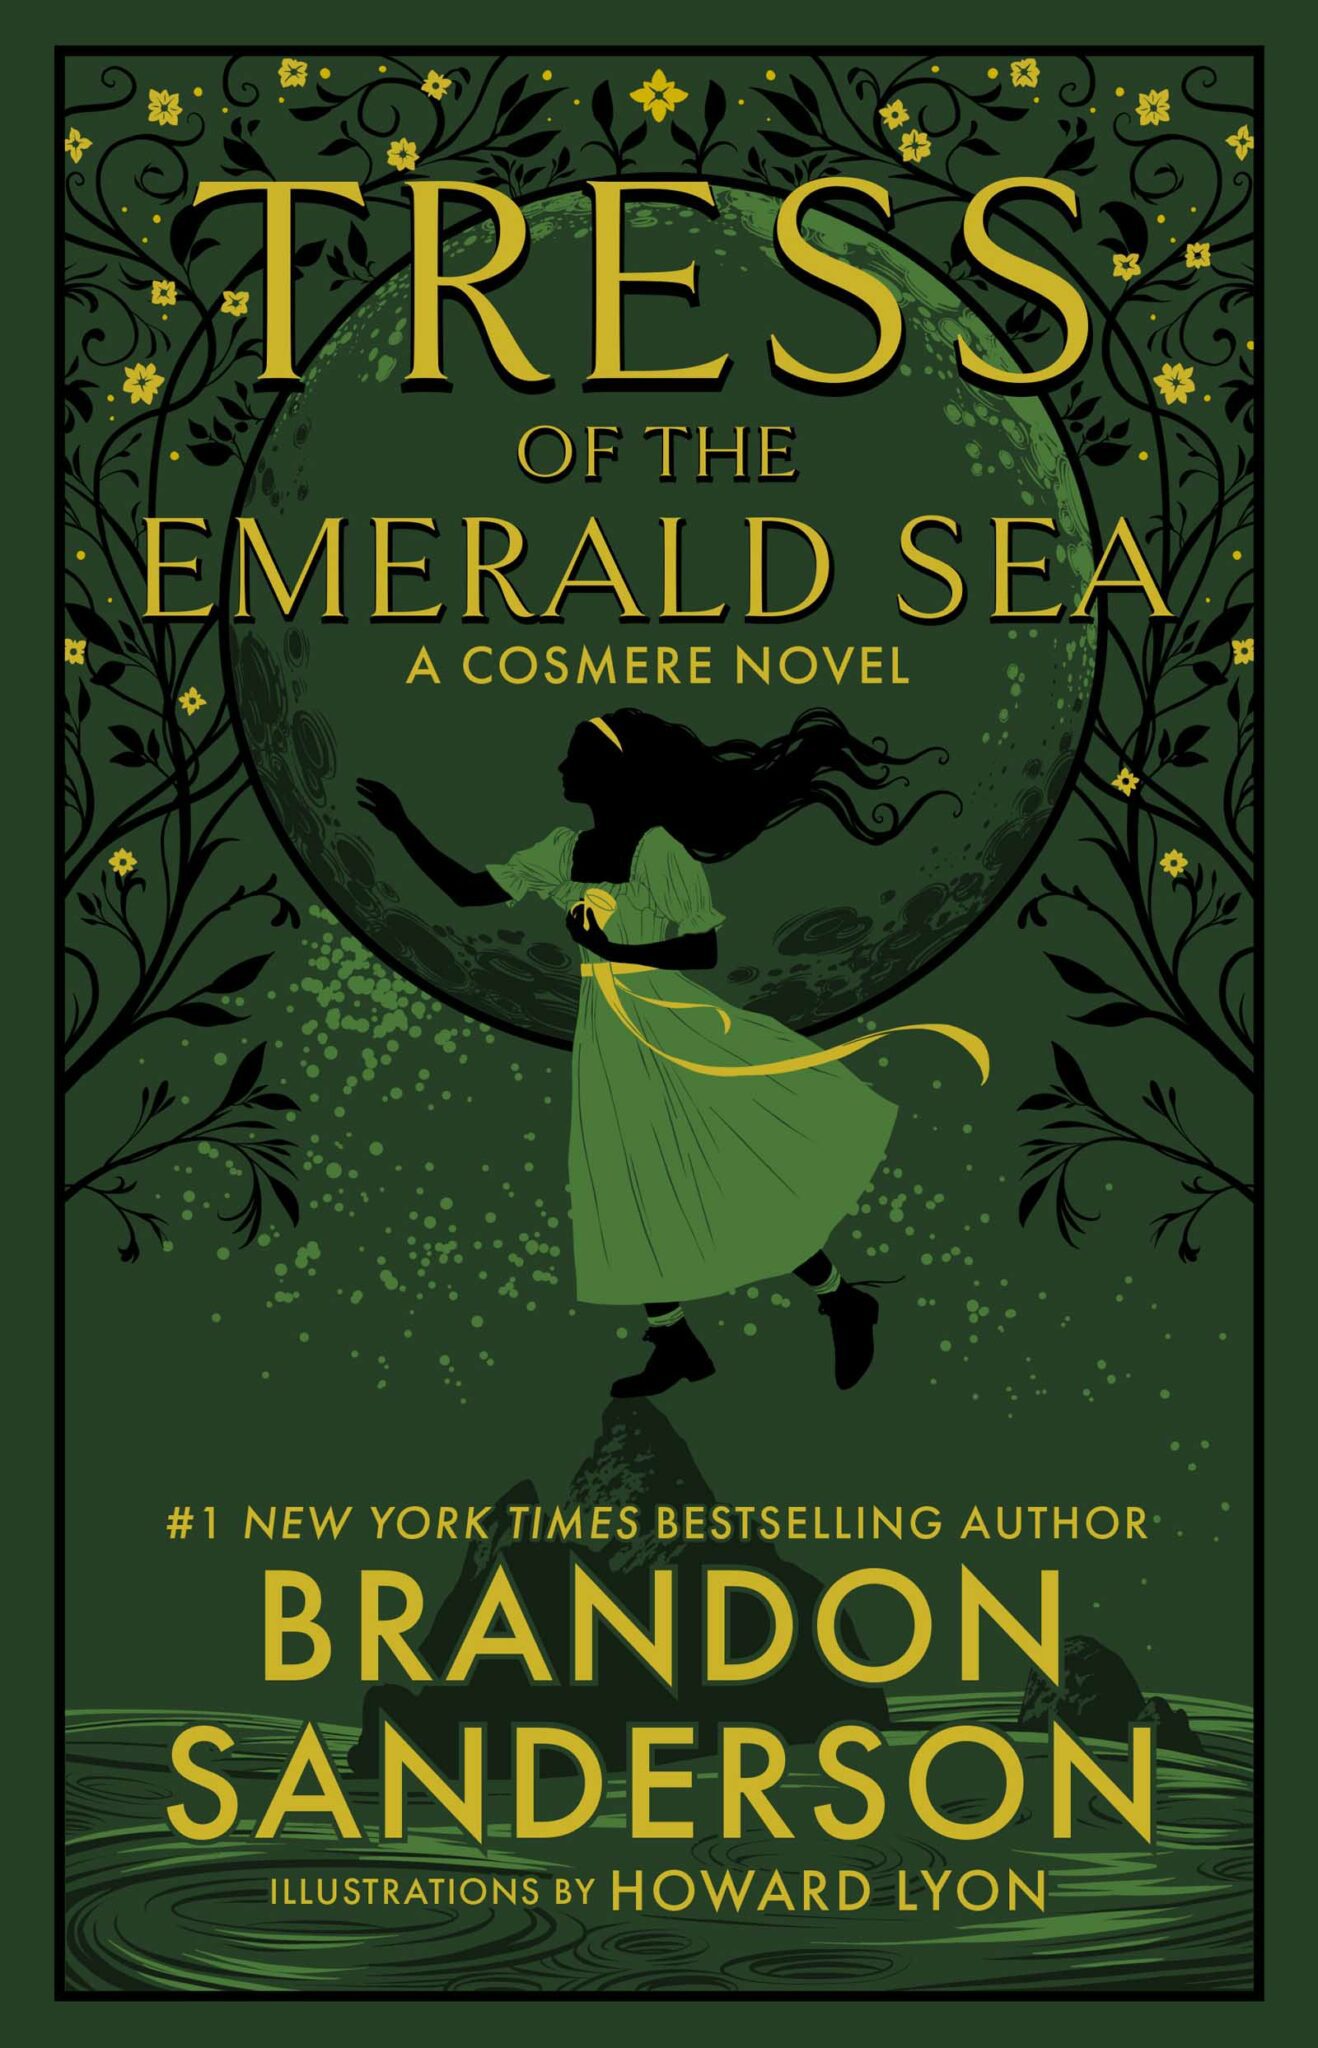 tress of the emerald sea audio book